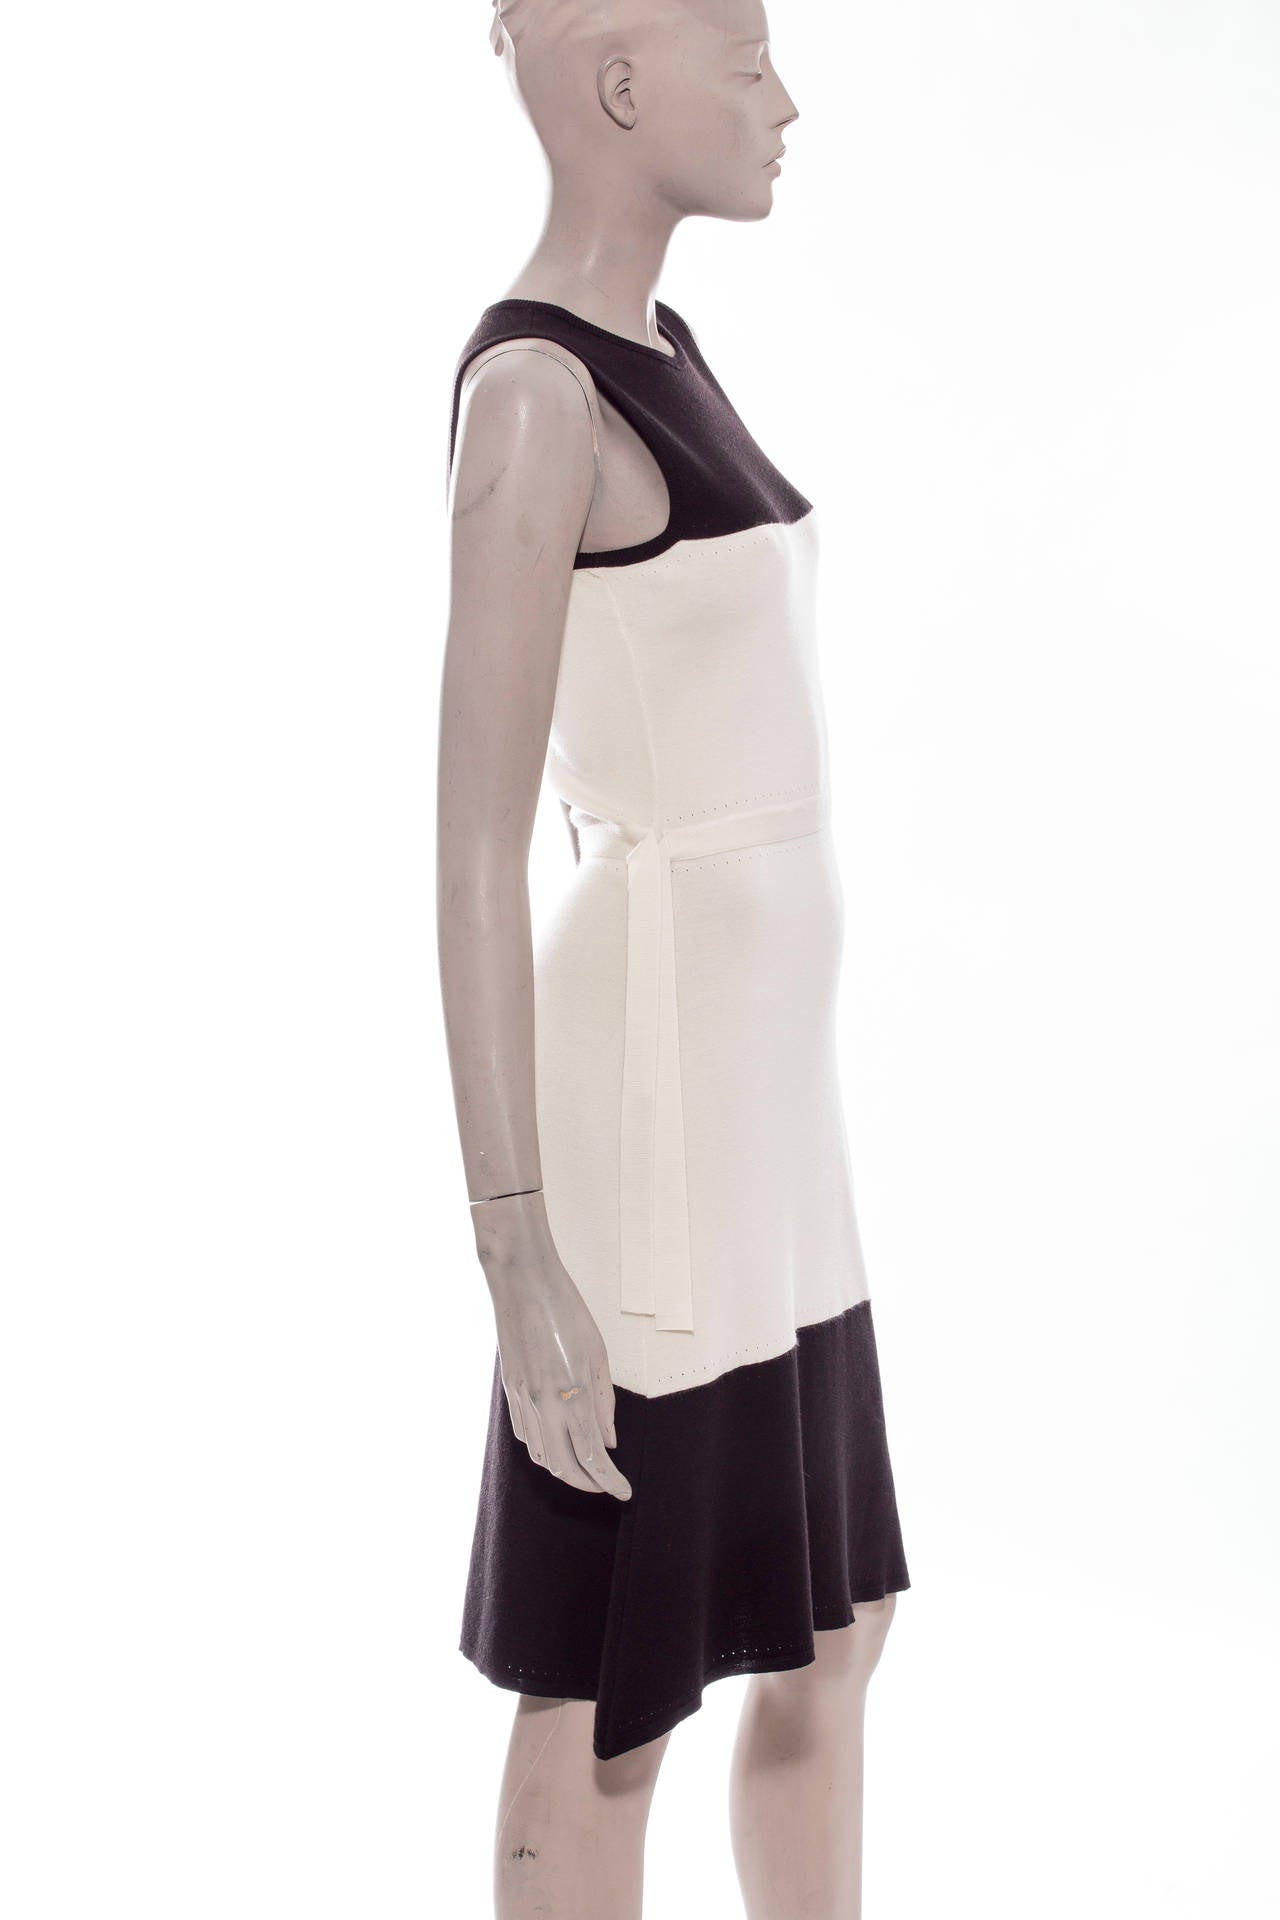 Chado Ralph Rucci cashmere silk sleeveless dress with back zip.